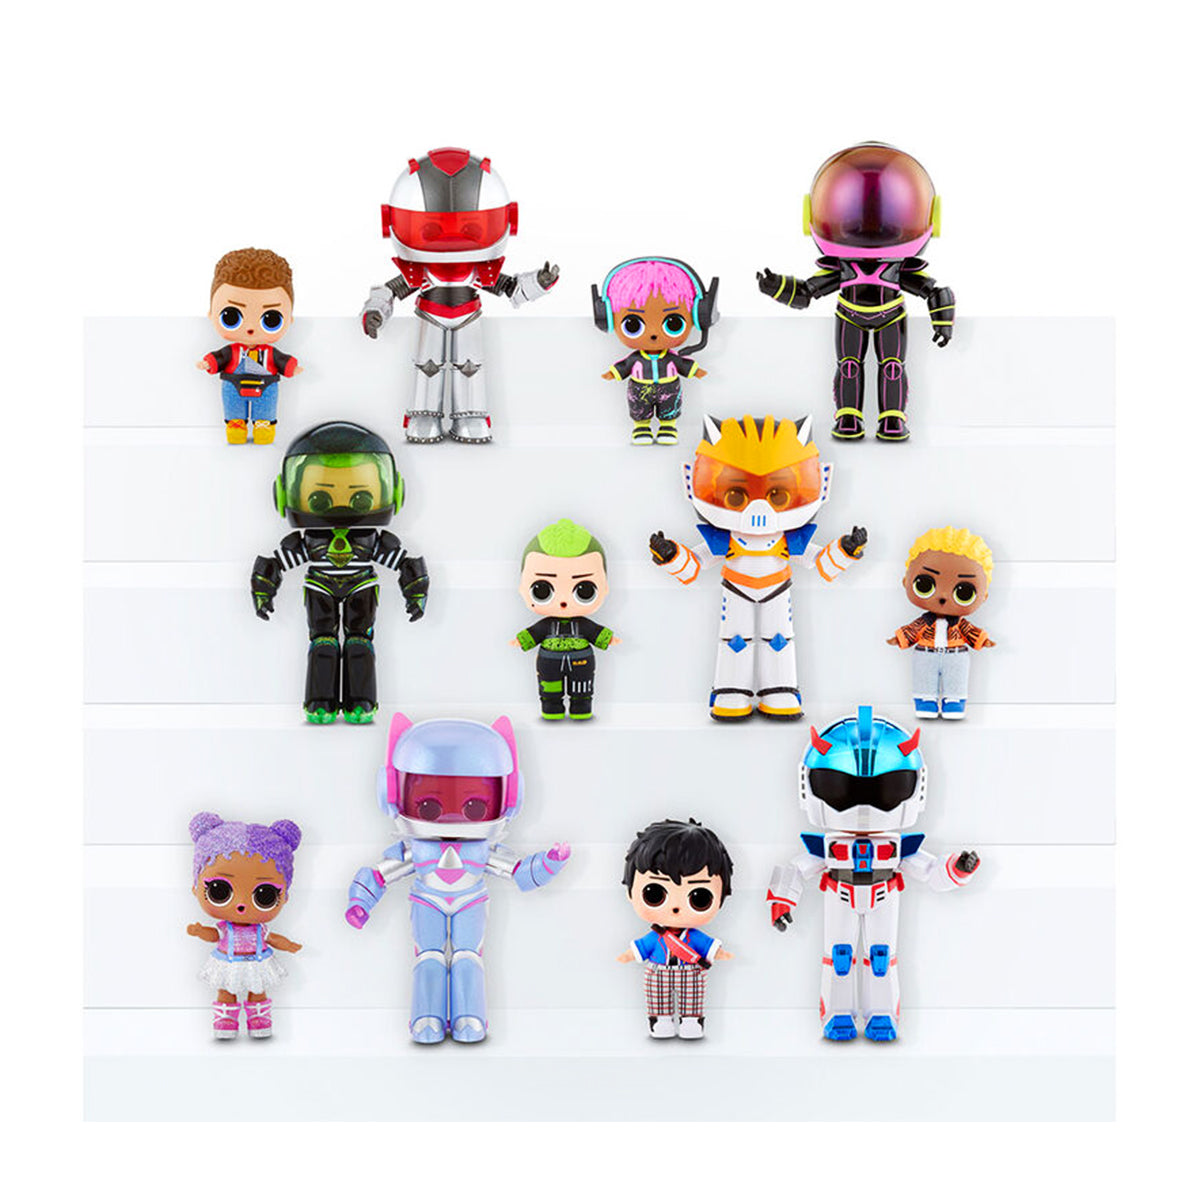 L.O.L. Surprise! Boys Arcade Heroes ? Action Figure Doll with 15 Surprises